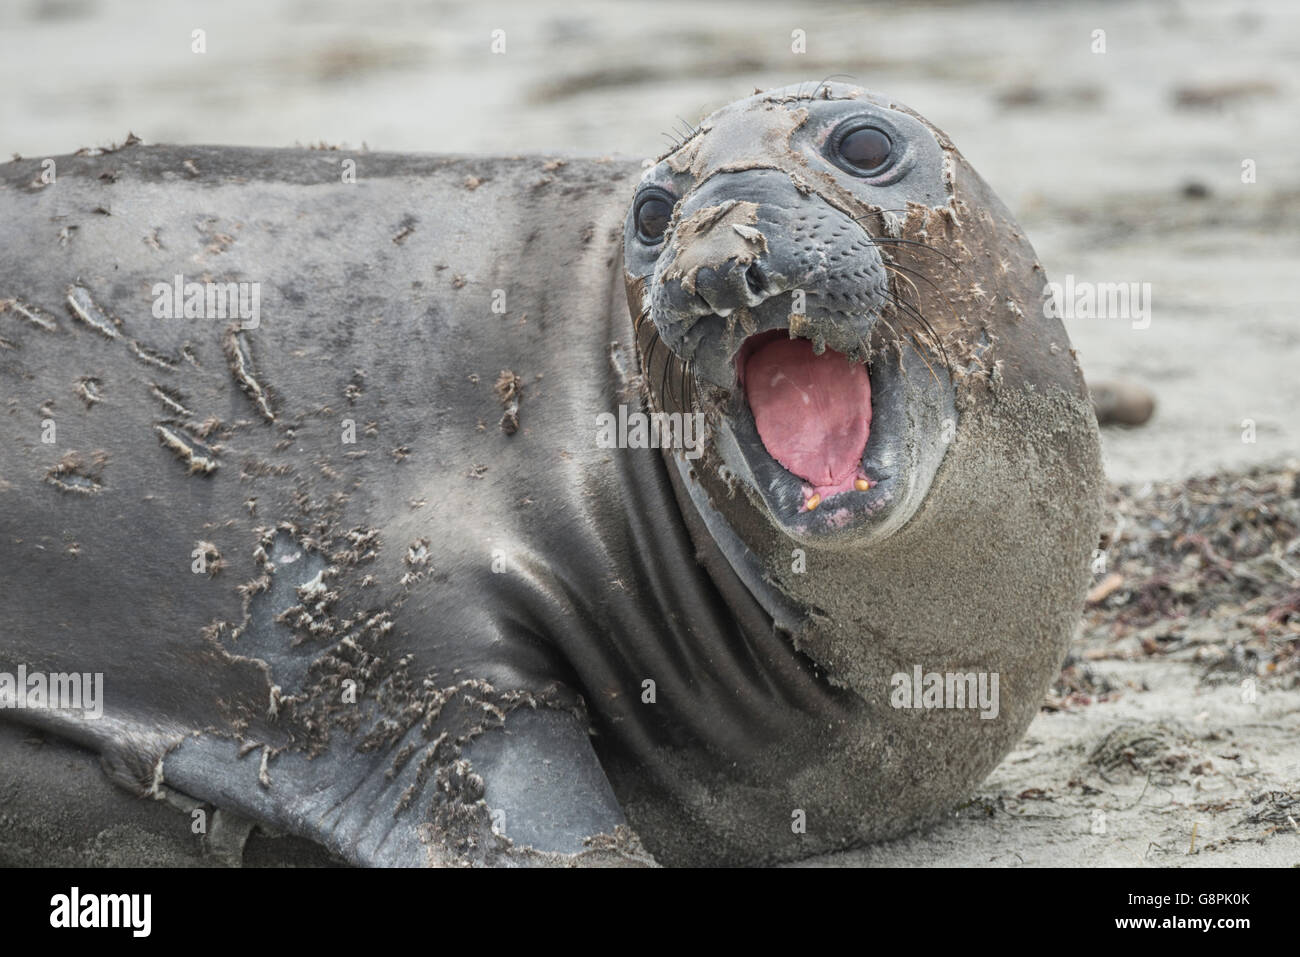 Northern elephant seal (Mirounga angustirostris) Stock Photo